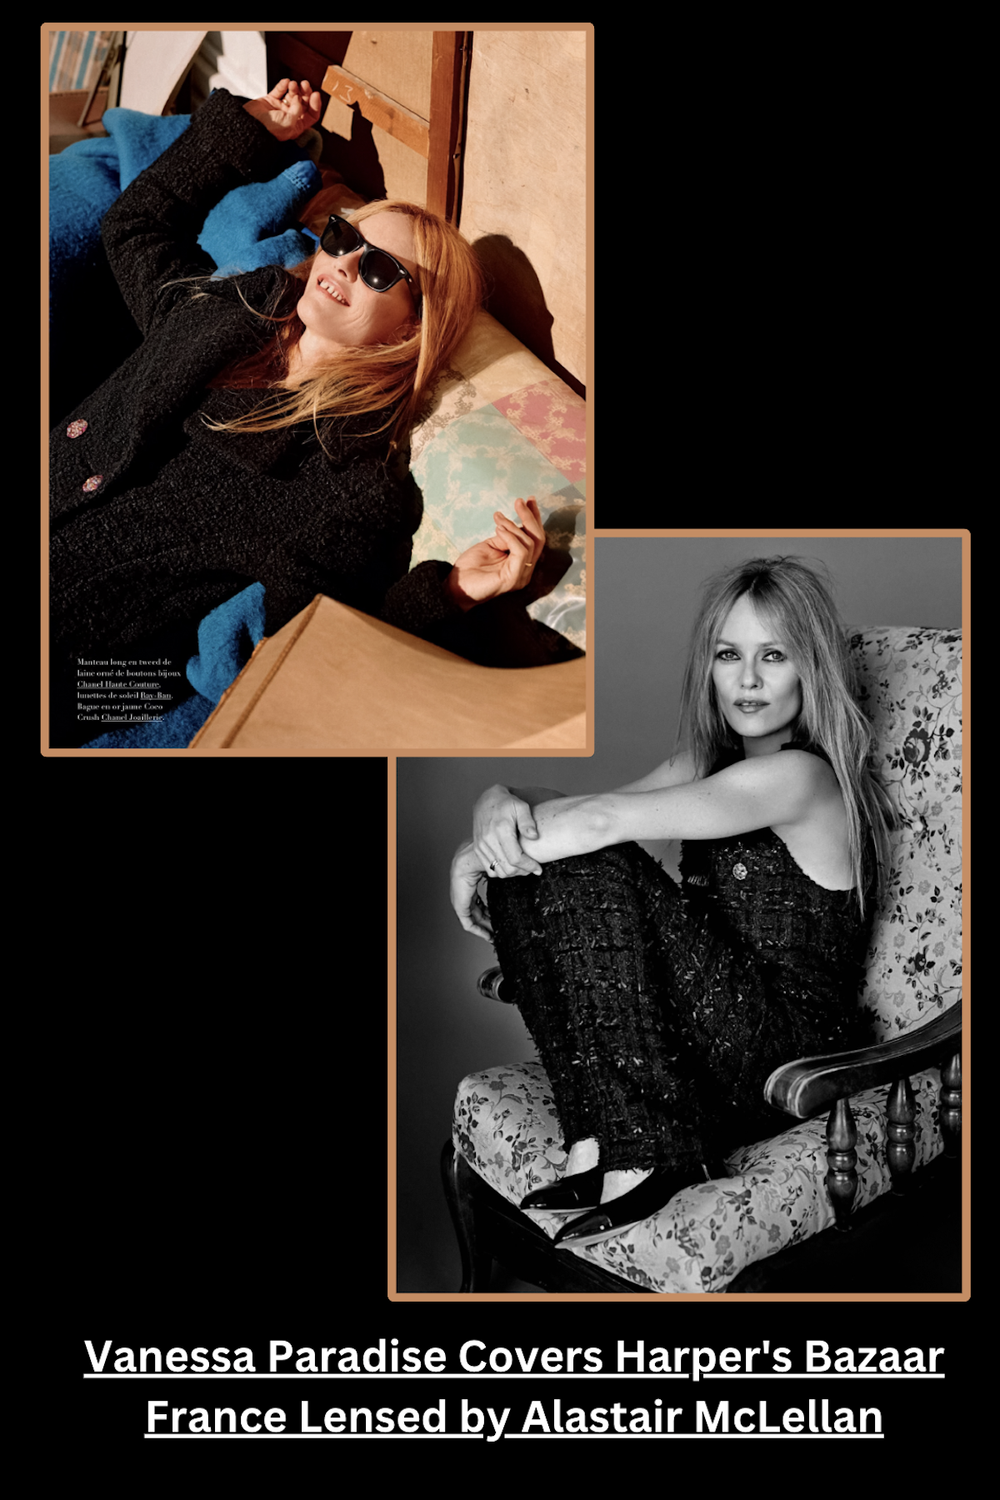 Dior Unveils The New Miss Dior Campaign Starring Natalie Portman - A&E  Magazine